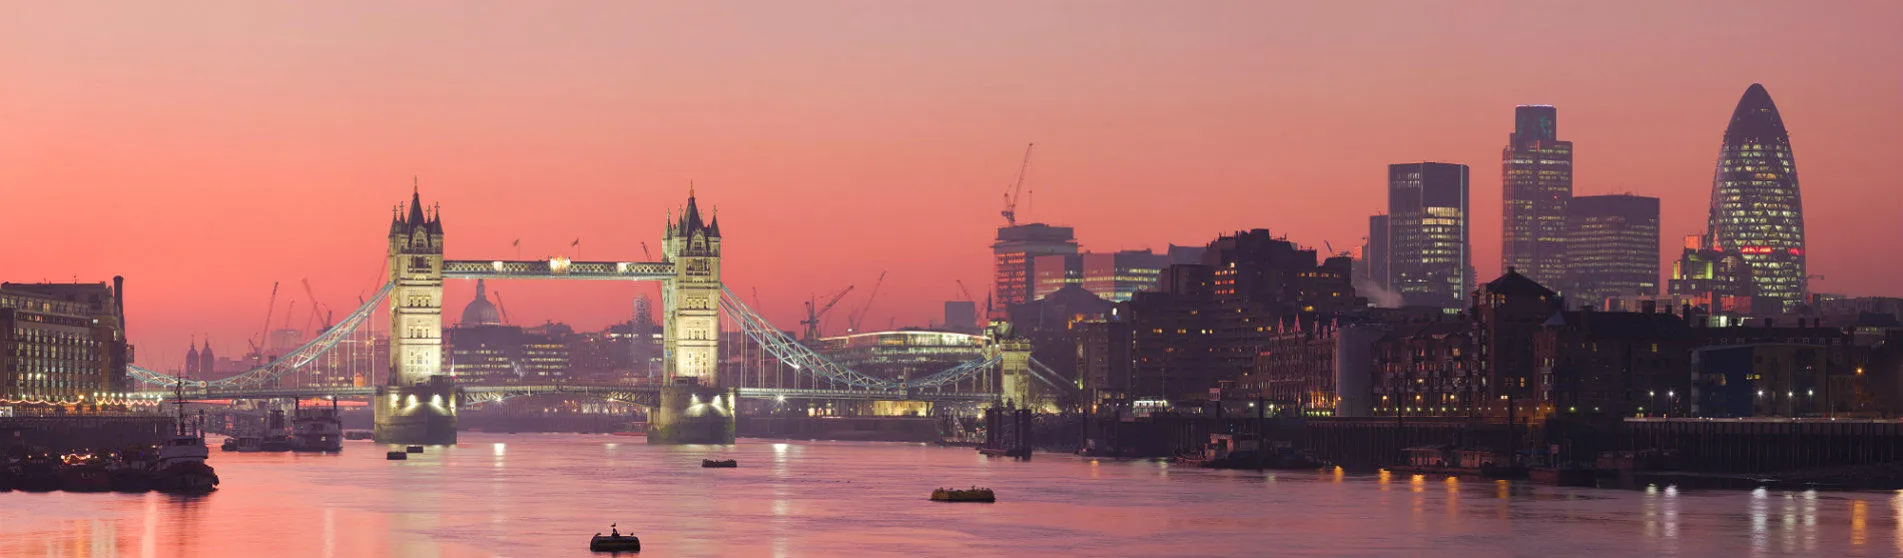 nev-hero-london-thames-sunset-panorama